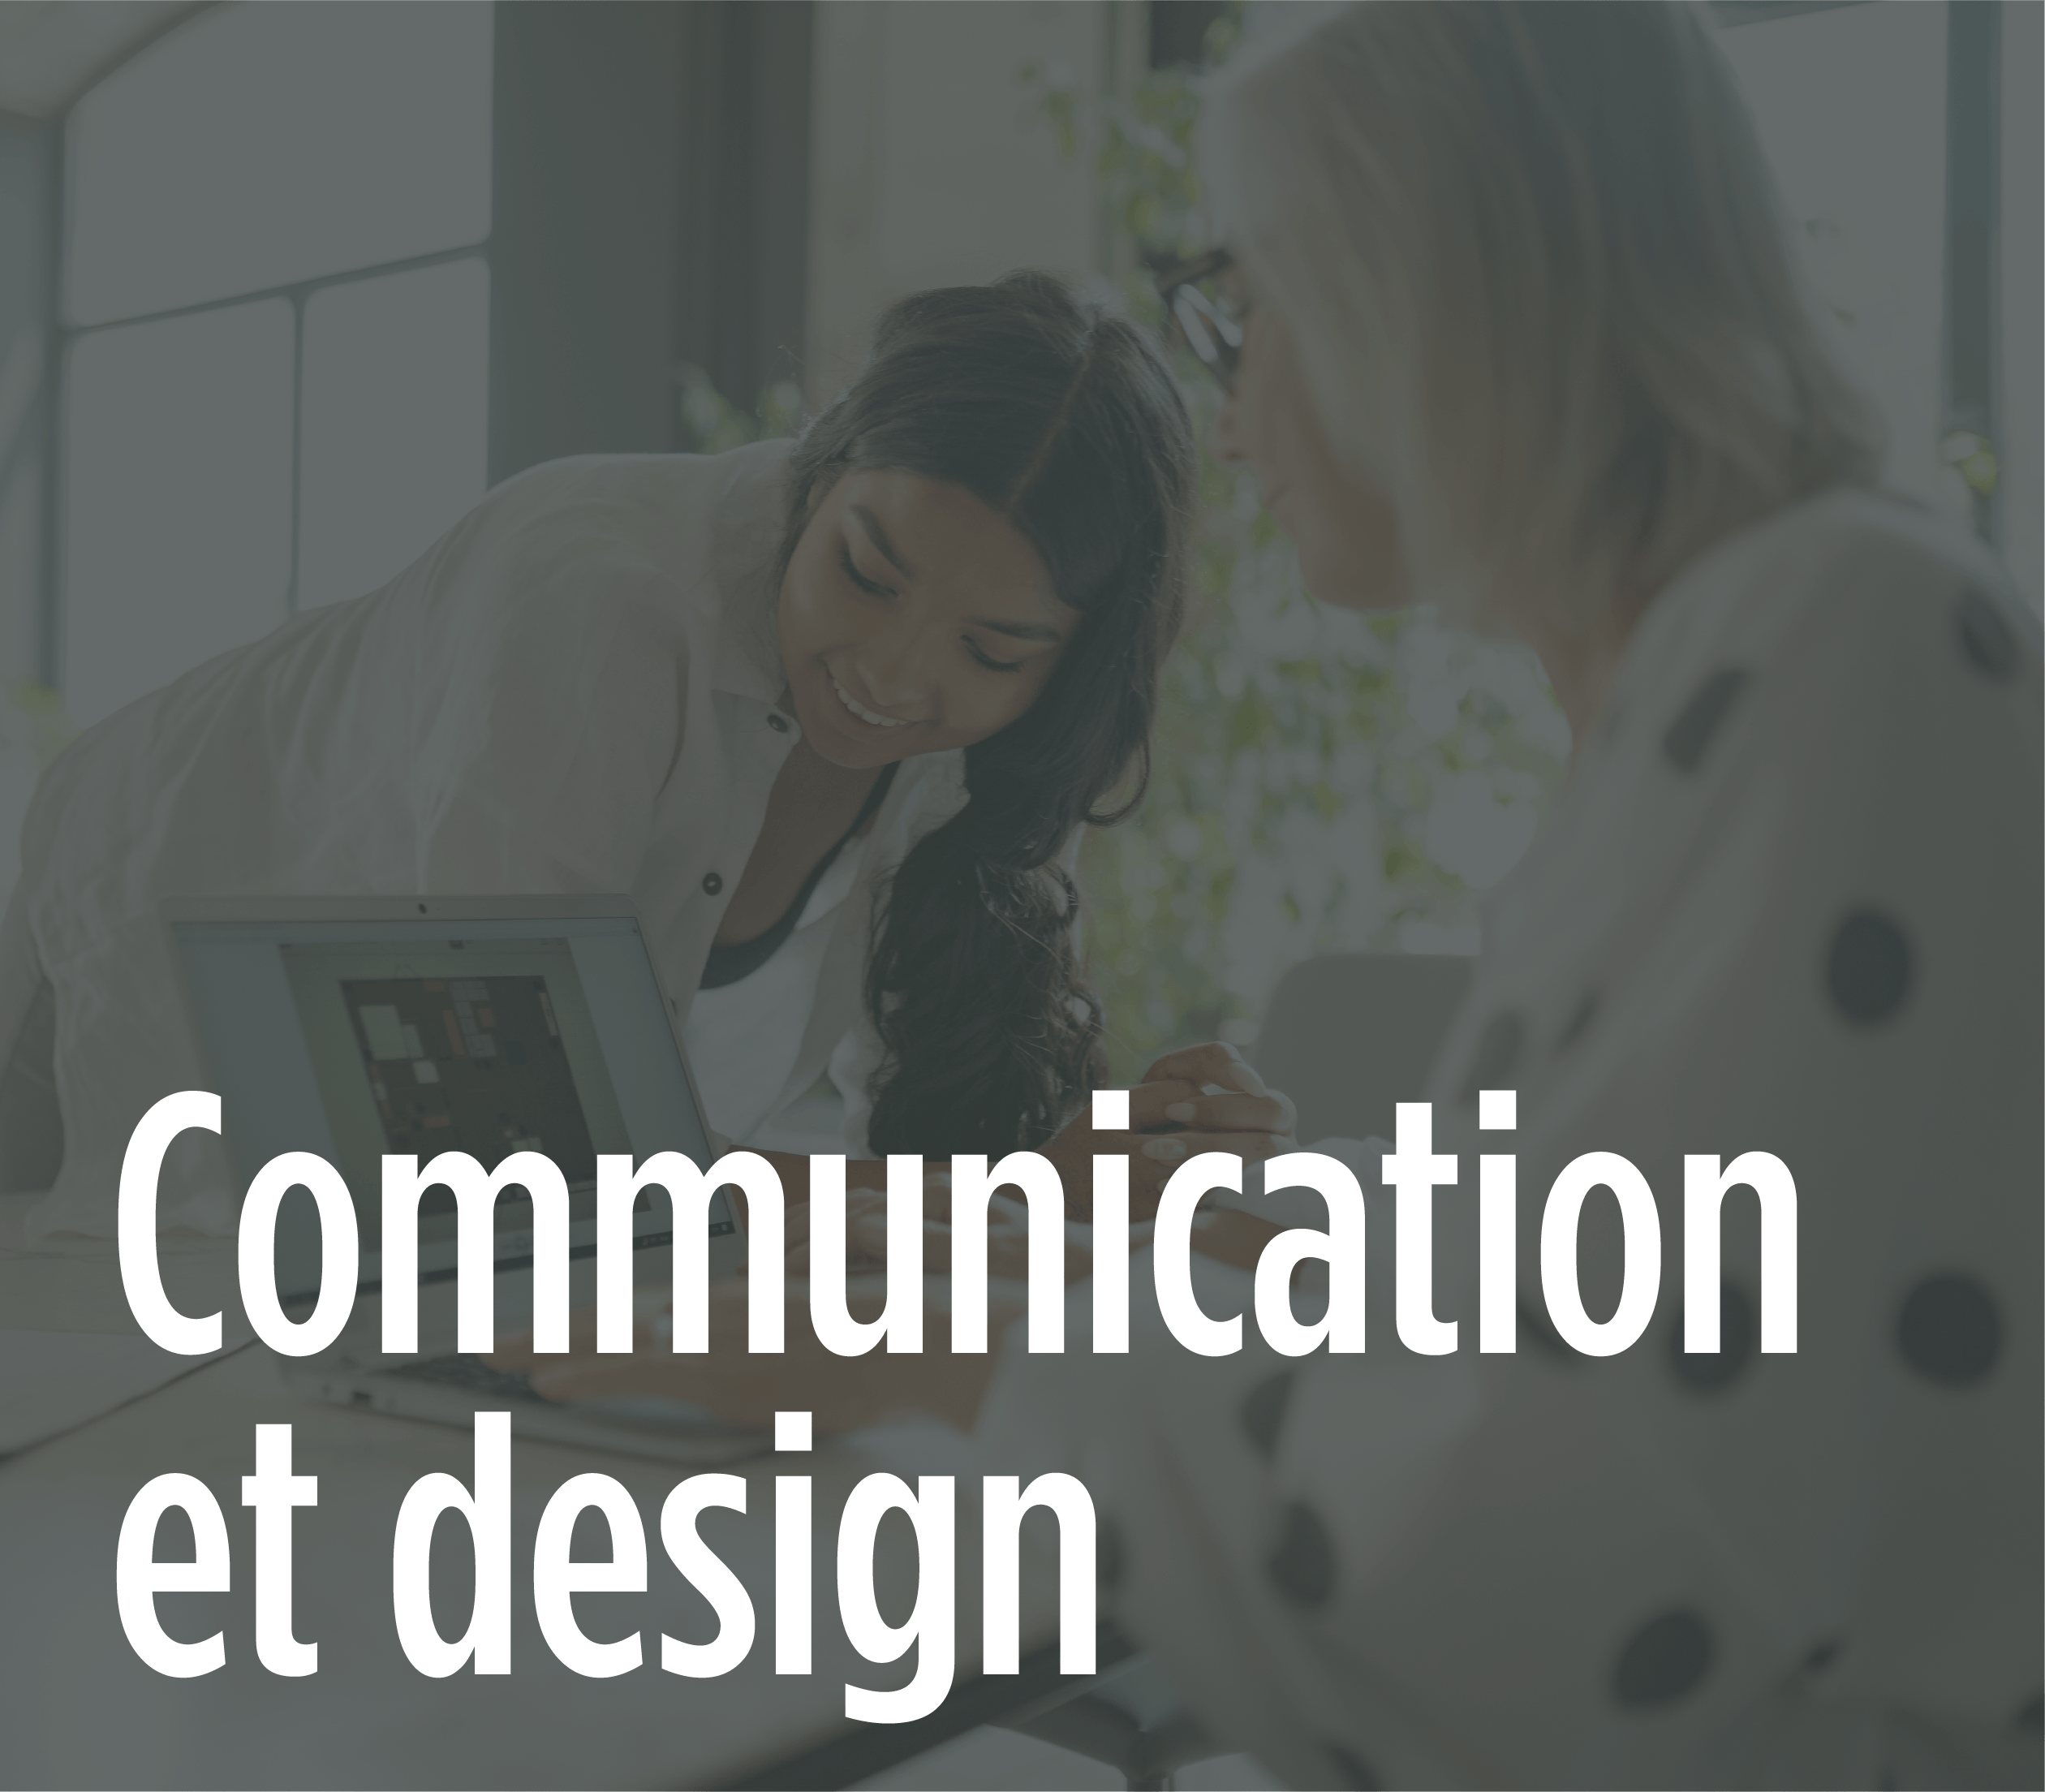 Communication et design formations CFA CY